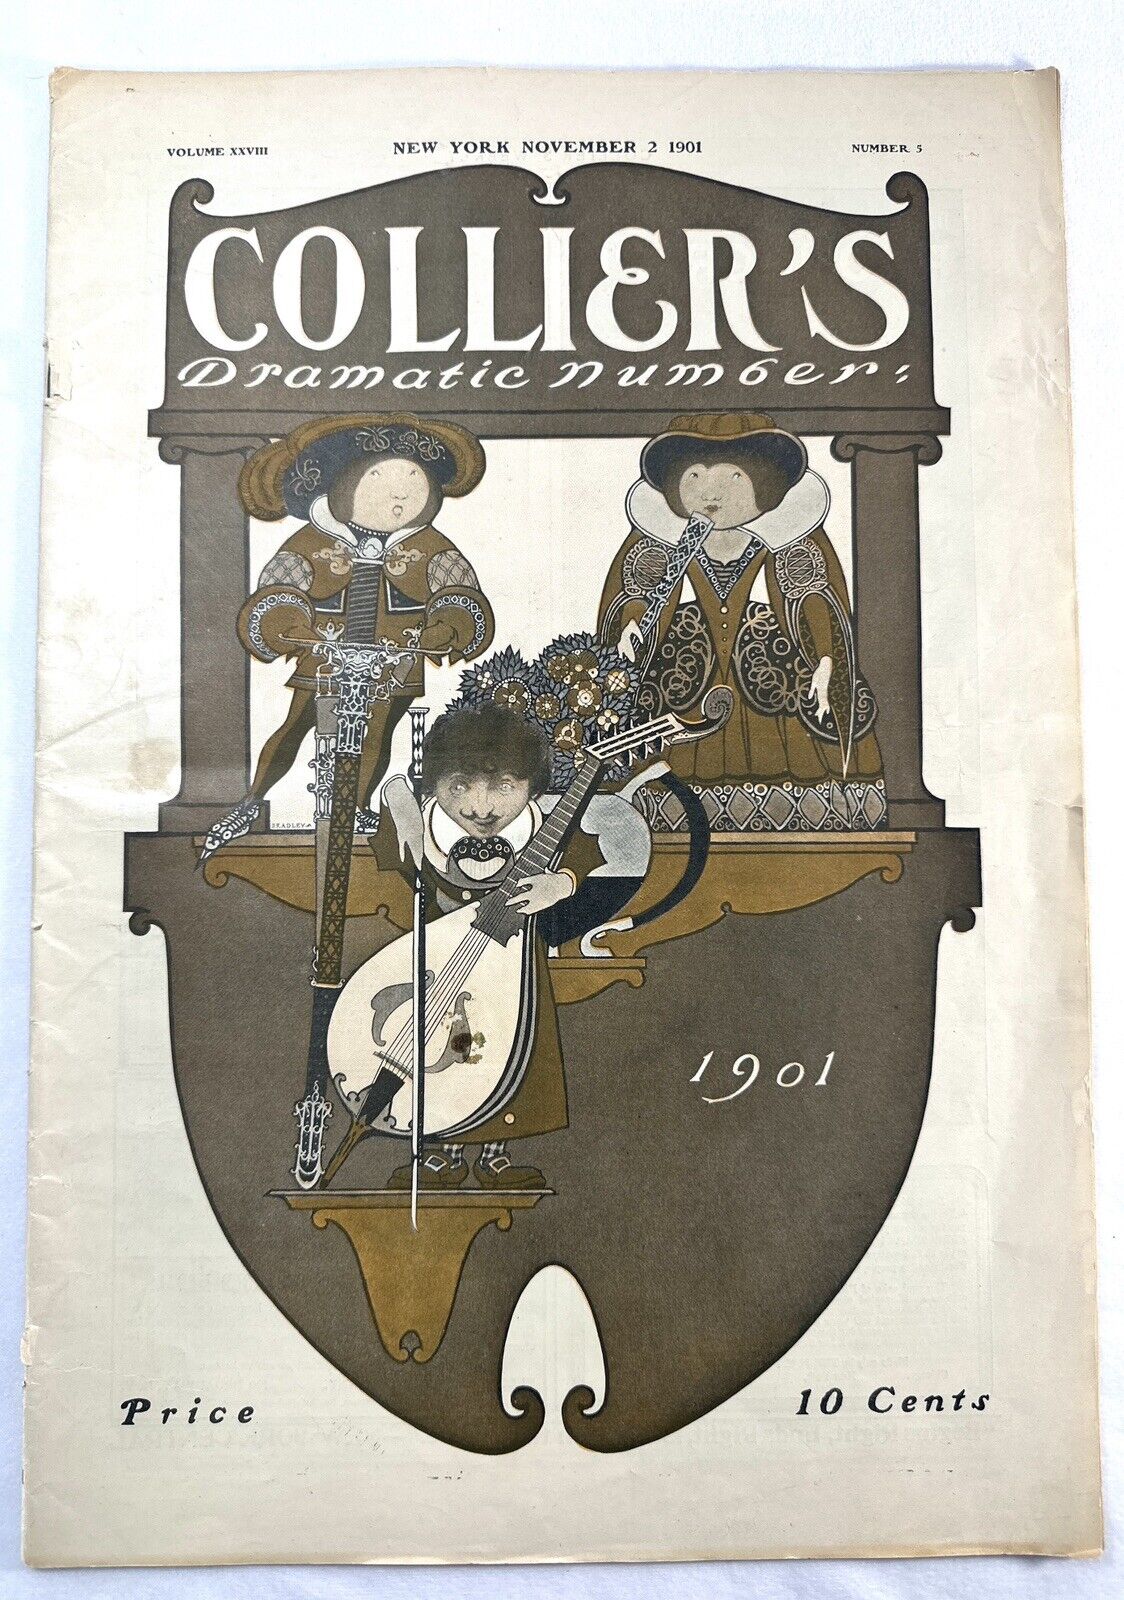 Antique Collier’s Magazine Newspaper Nov 2, 1901 Dramatic Numbers 